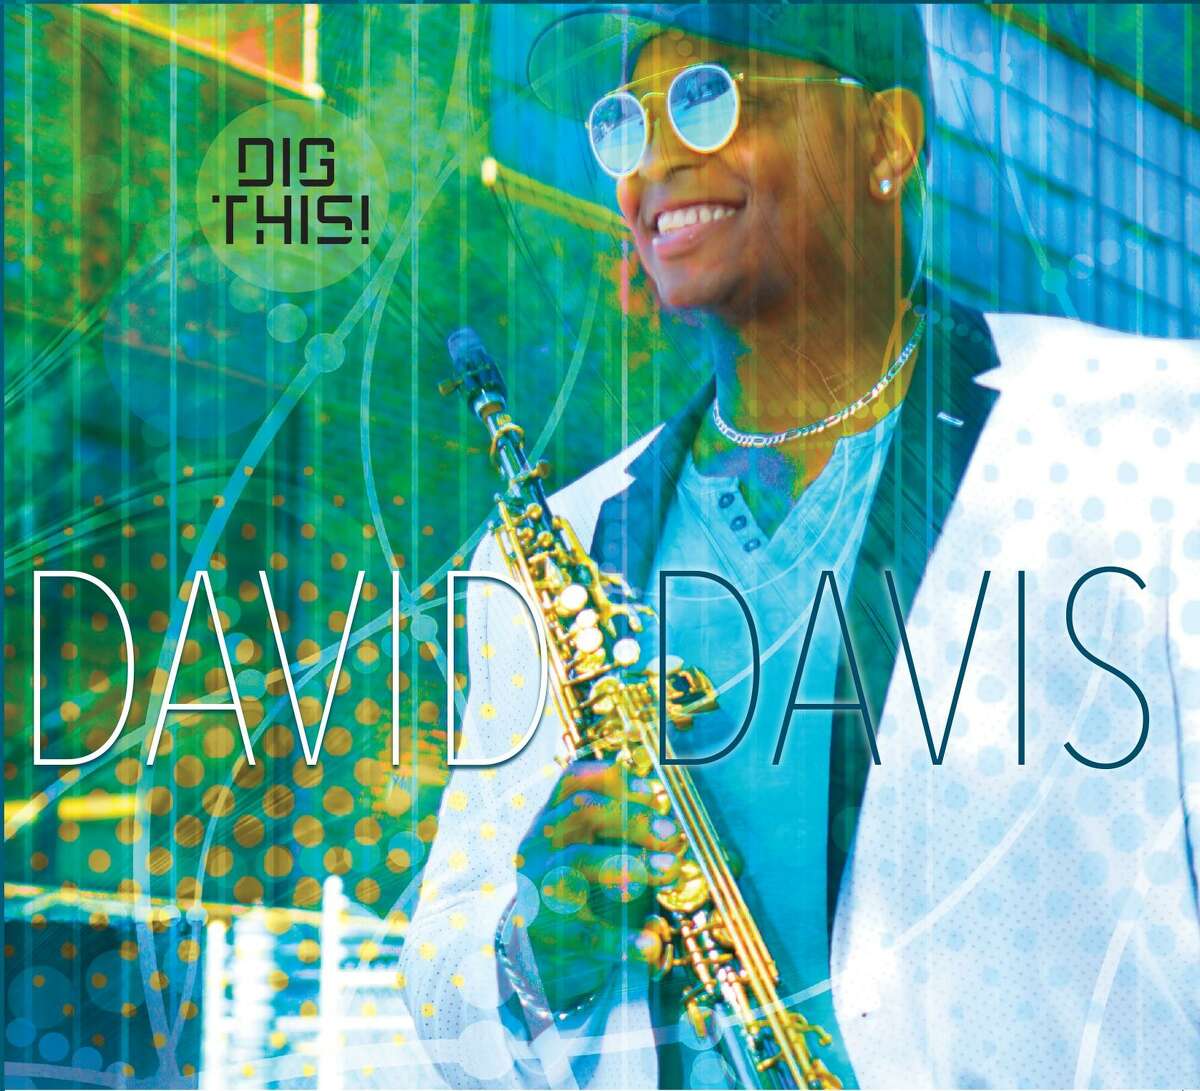 Jazz saxophonist David Davis’ latest recording is “Dig This!”